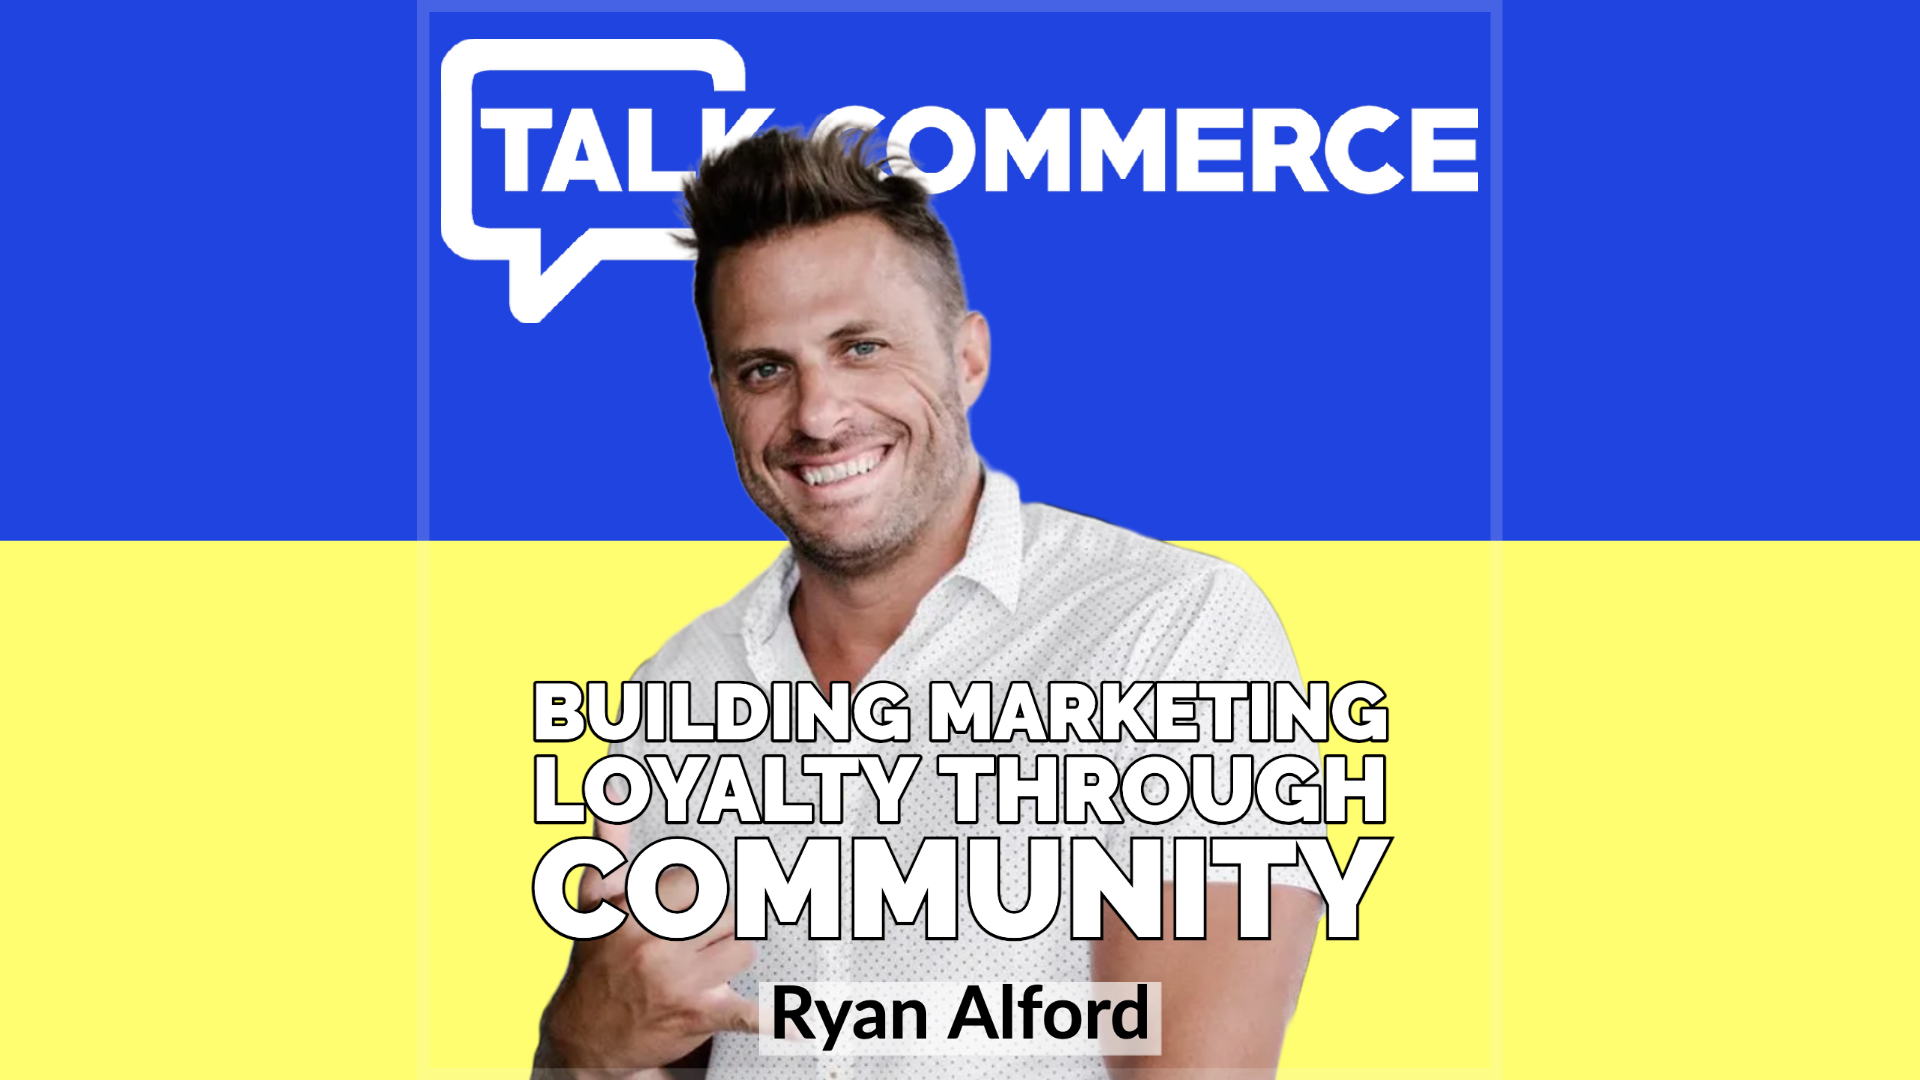 Talk-Commerce ryan alford